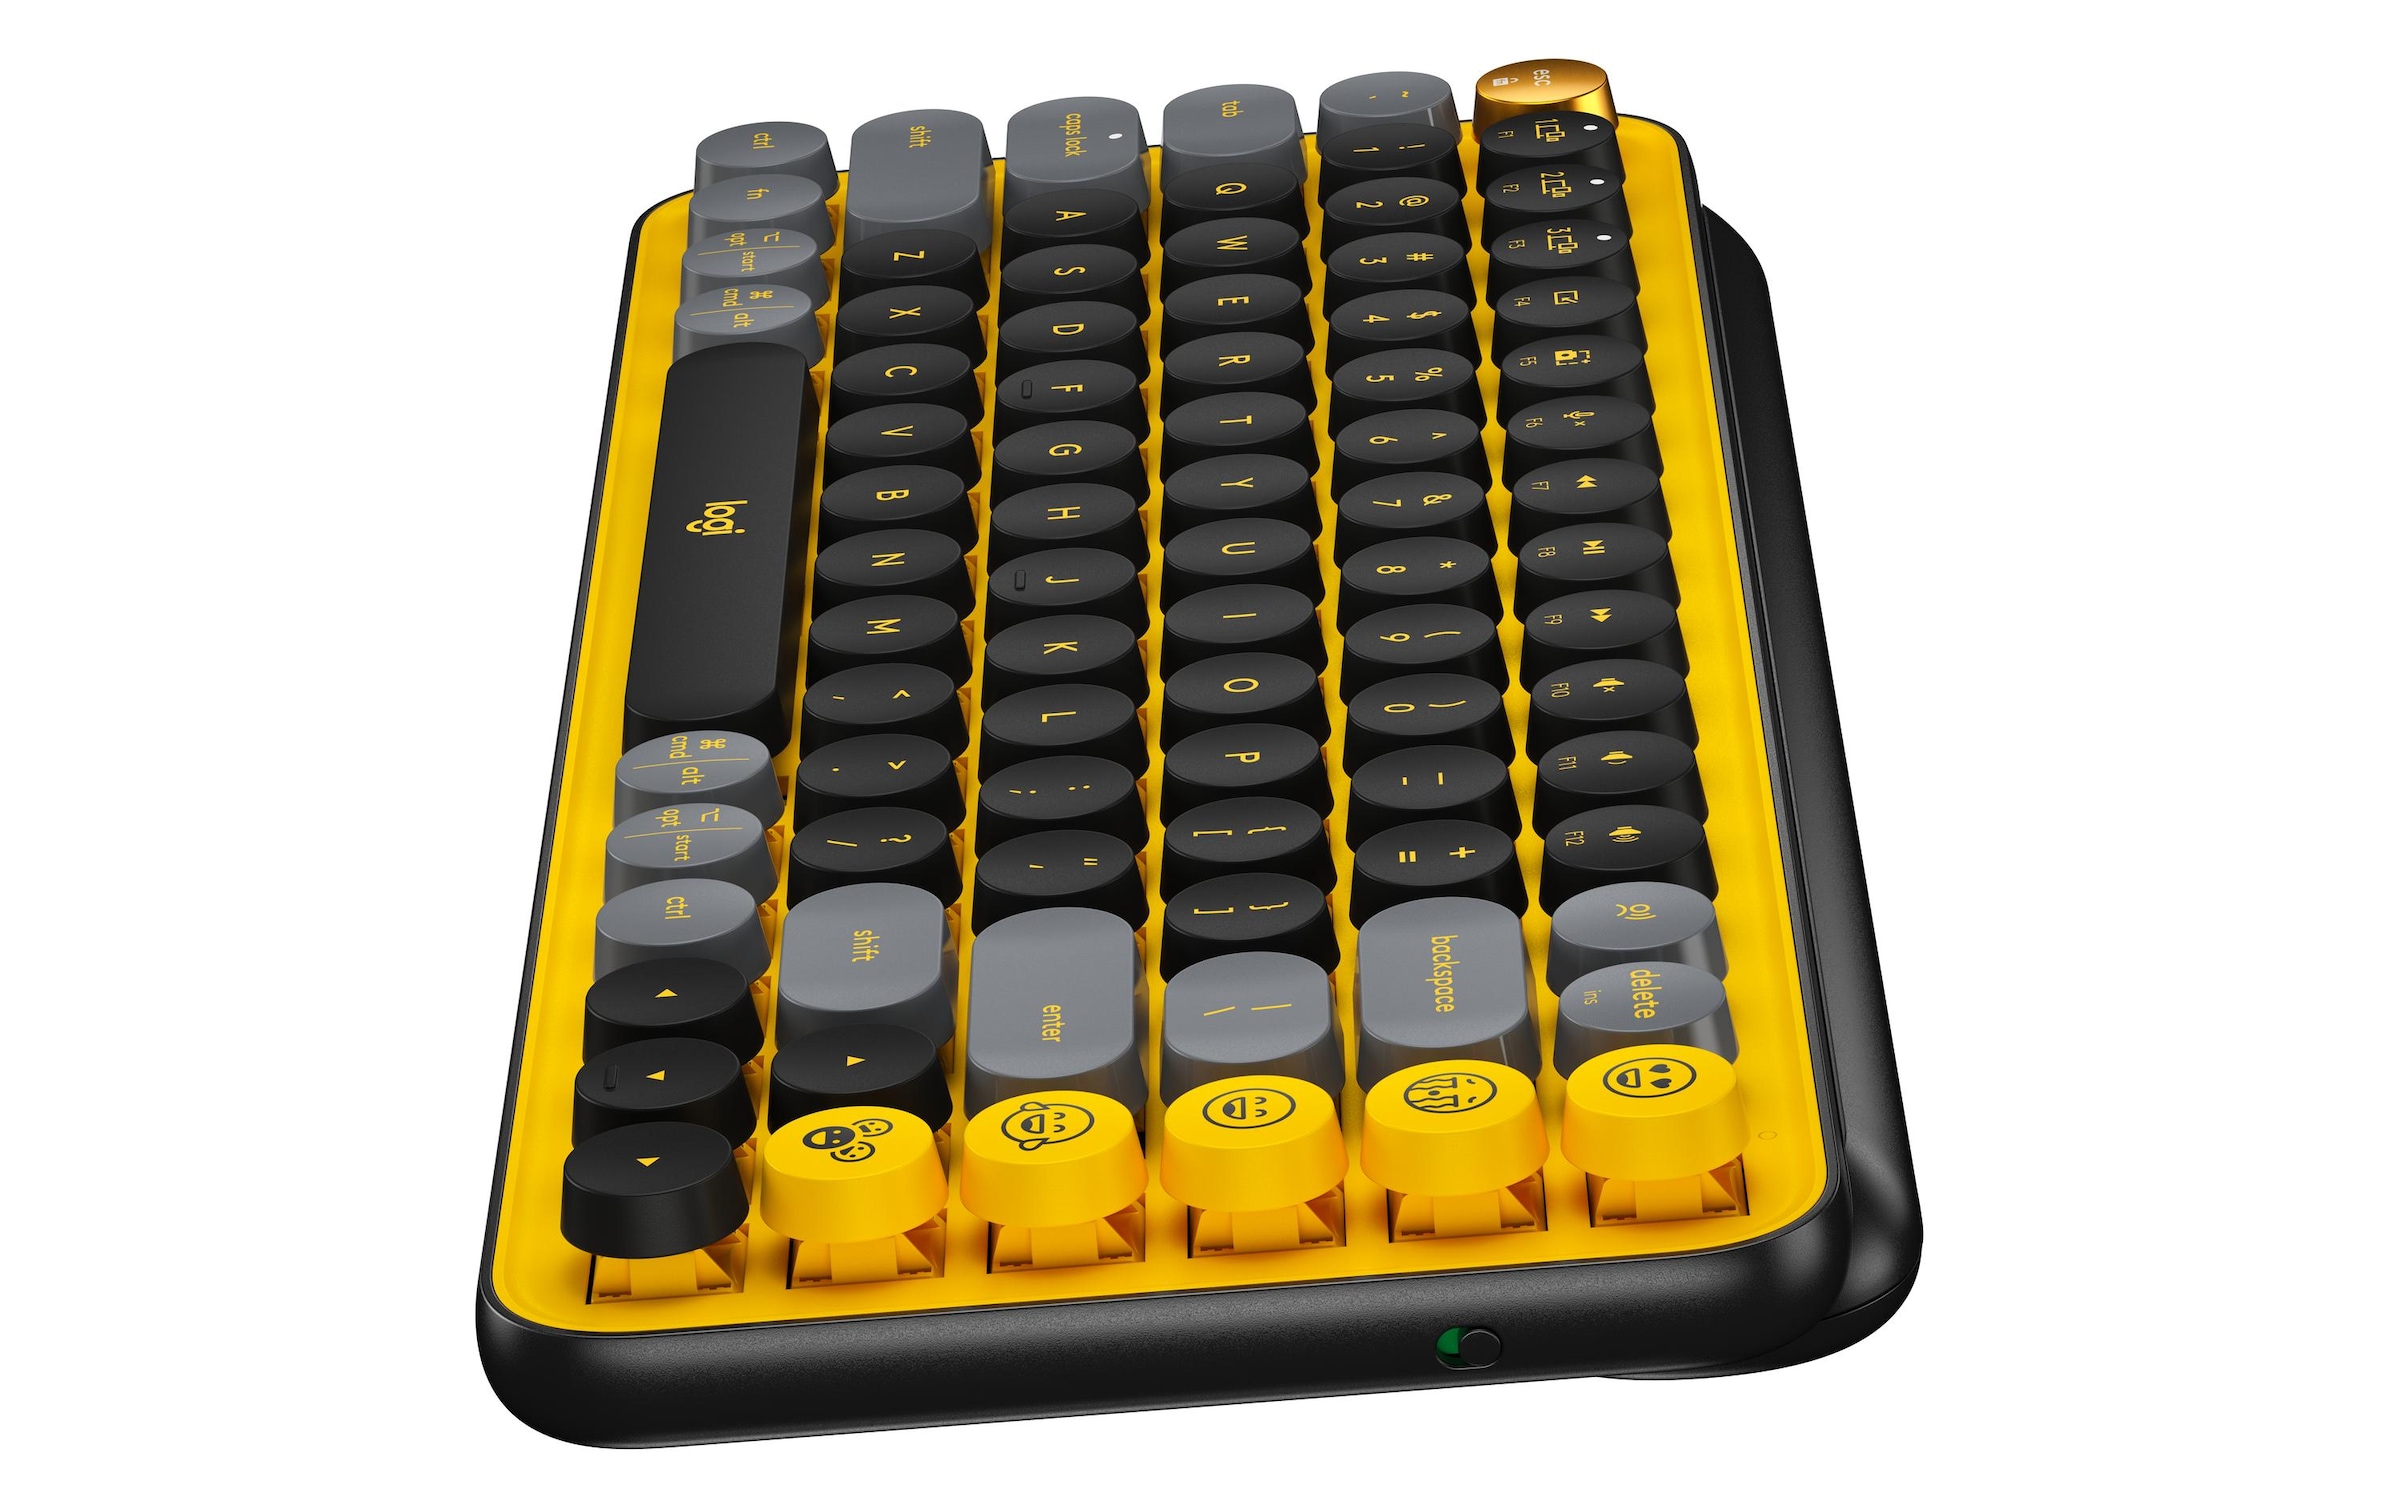 Logitech Wireless-Tastatur »POP Keys Blast Yellow«